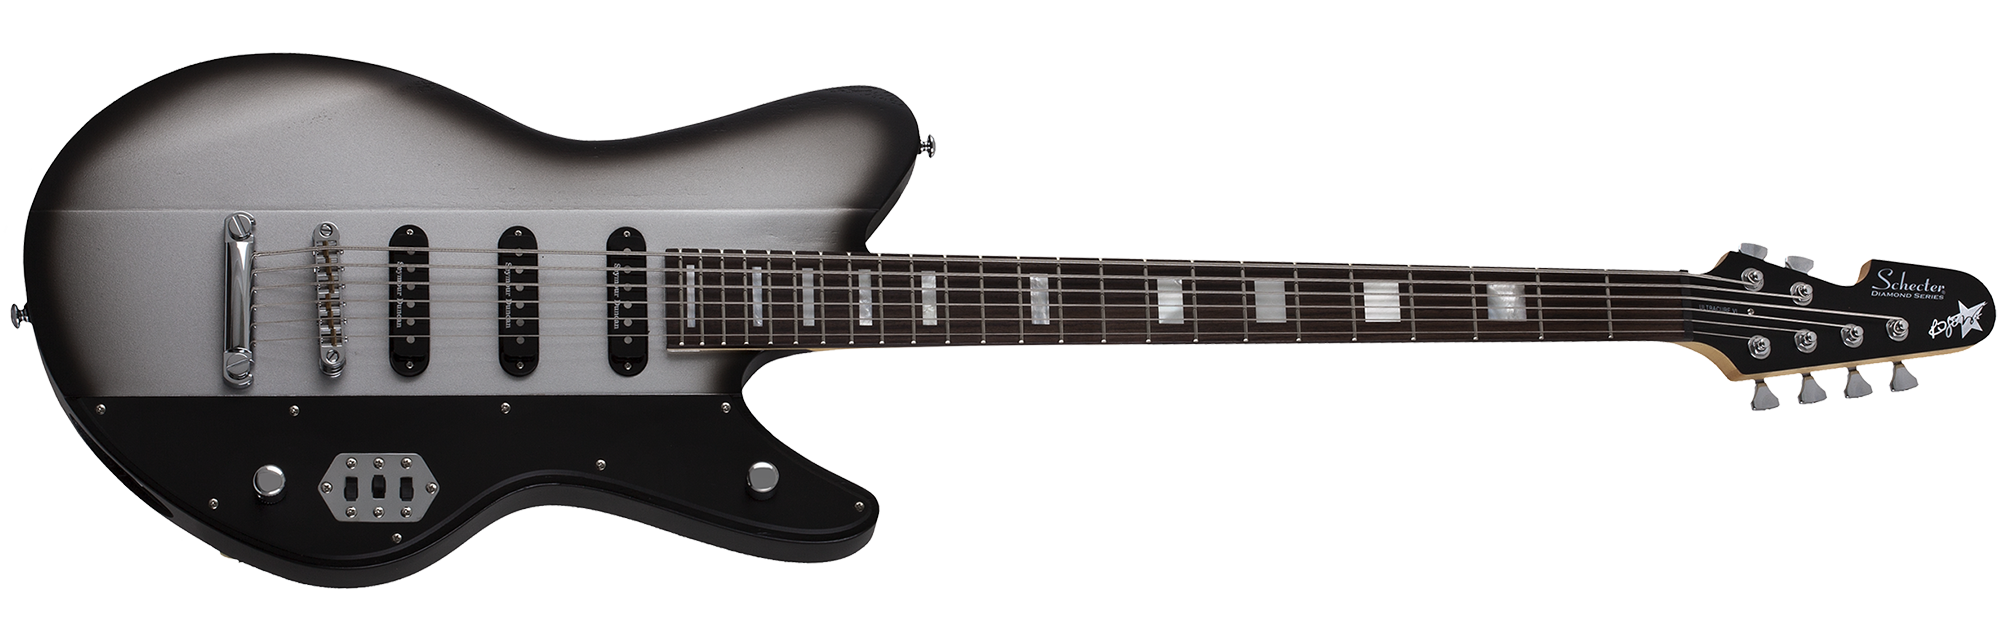 Schecter Robert Smith UltraCure VI Silver Burst Pearl SKU 363 - The Guitar World